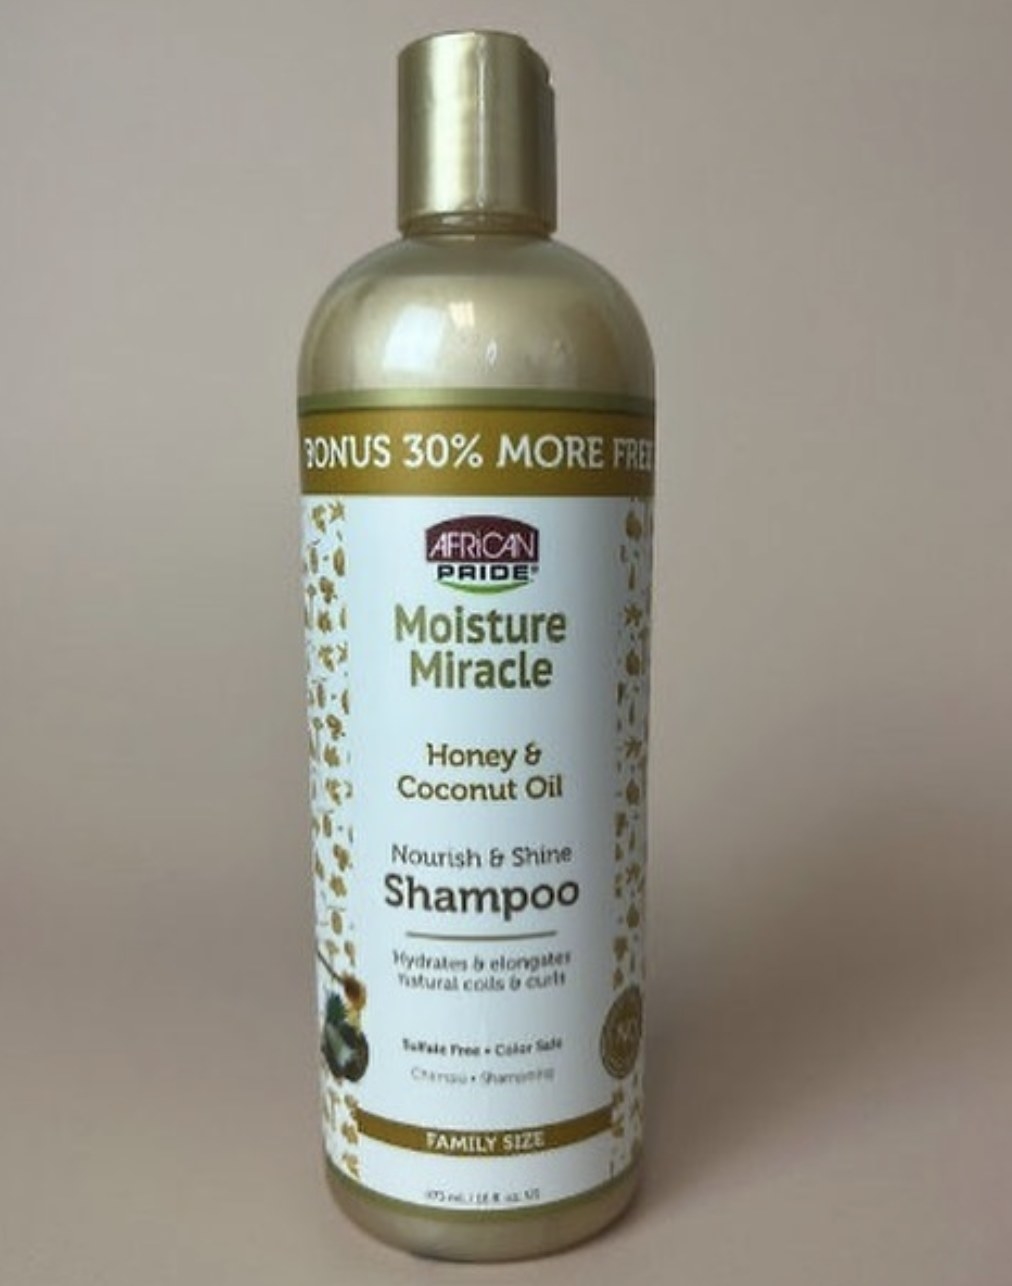 A bottle of moisturizing shampoo